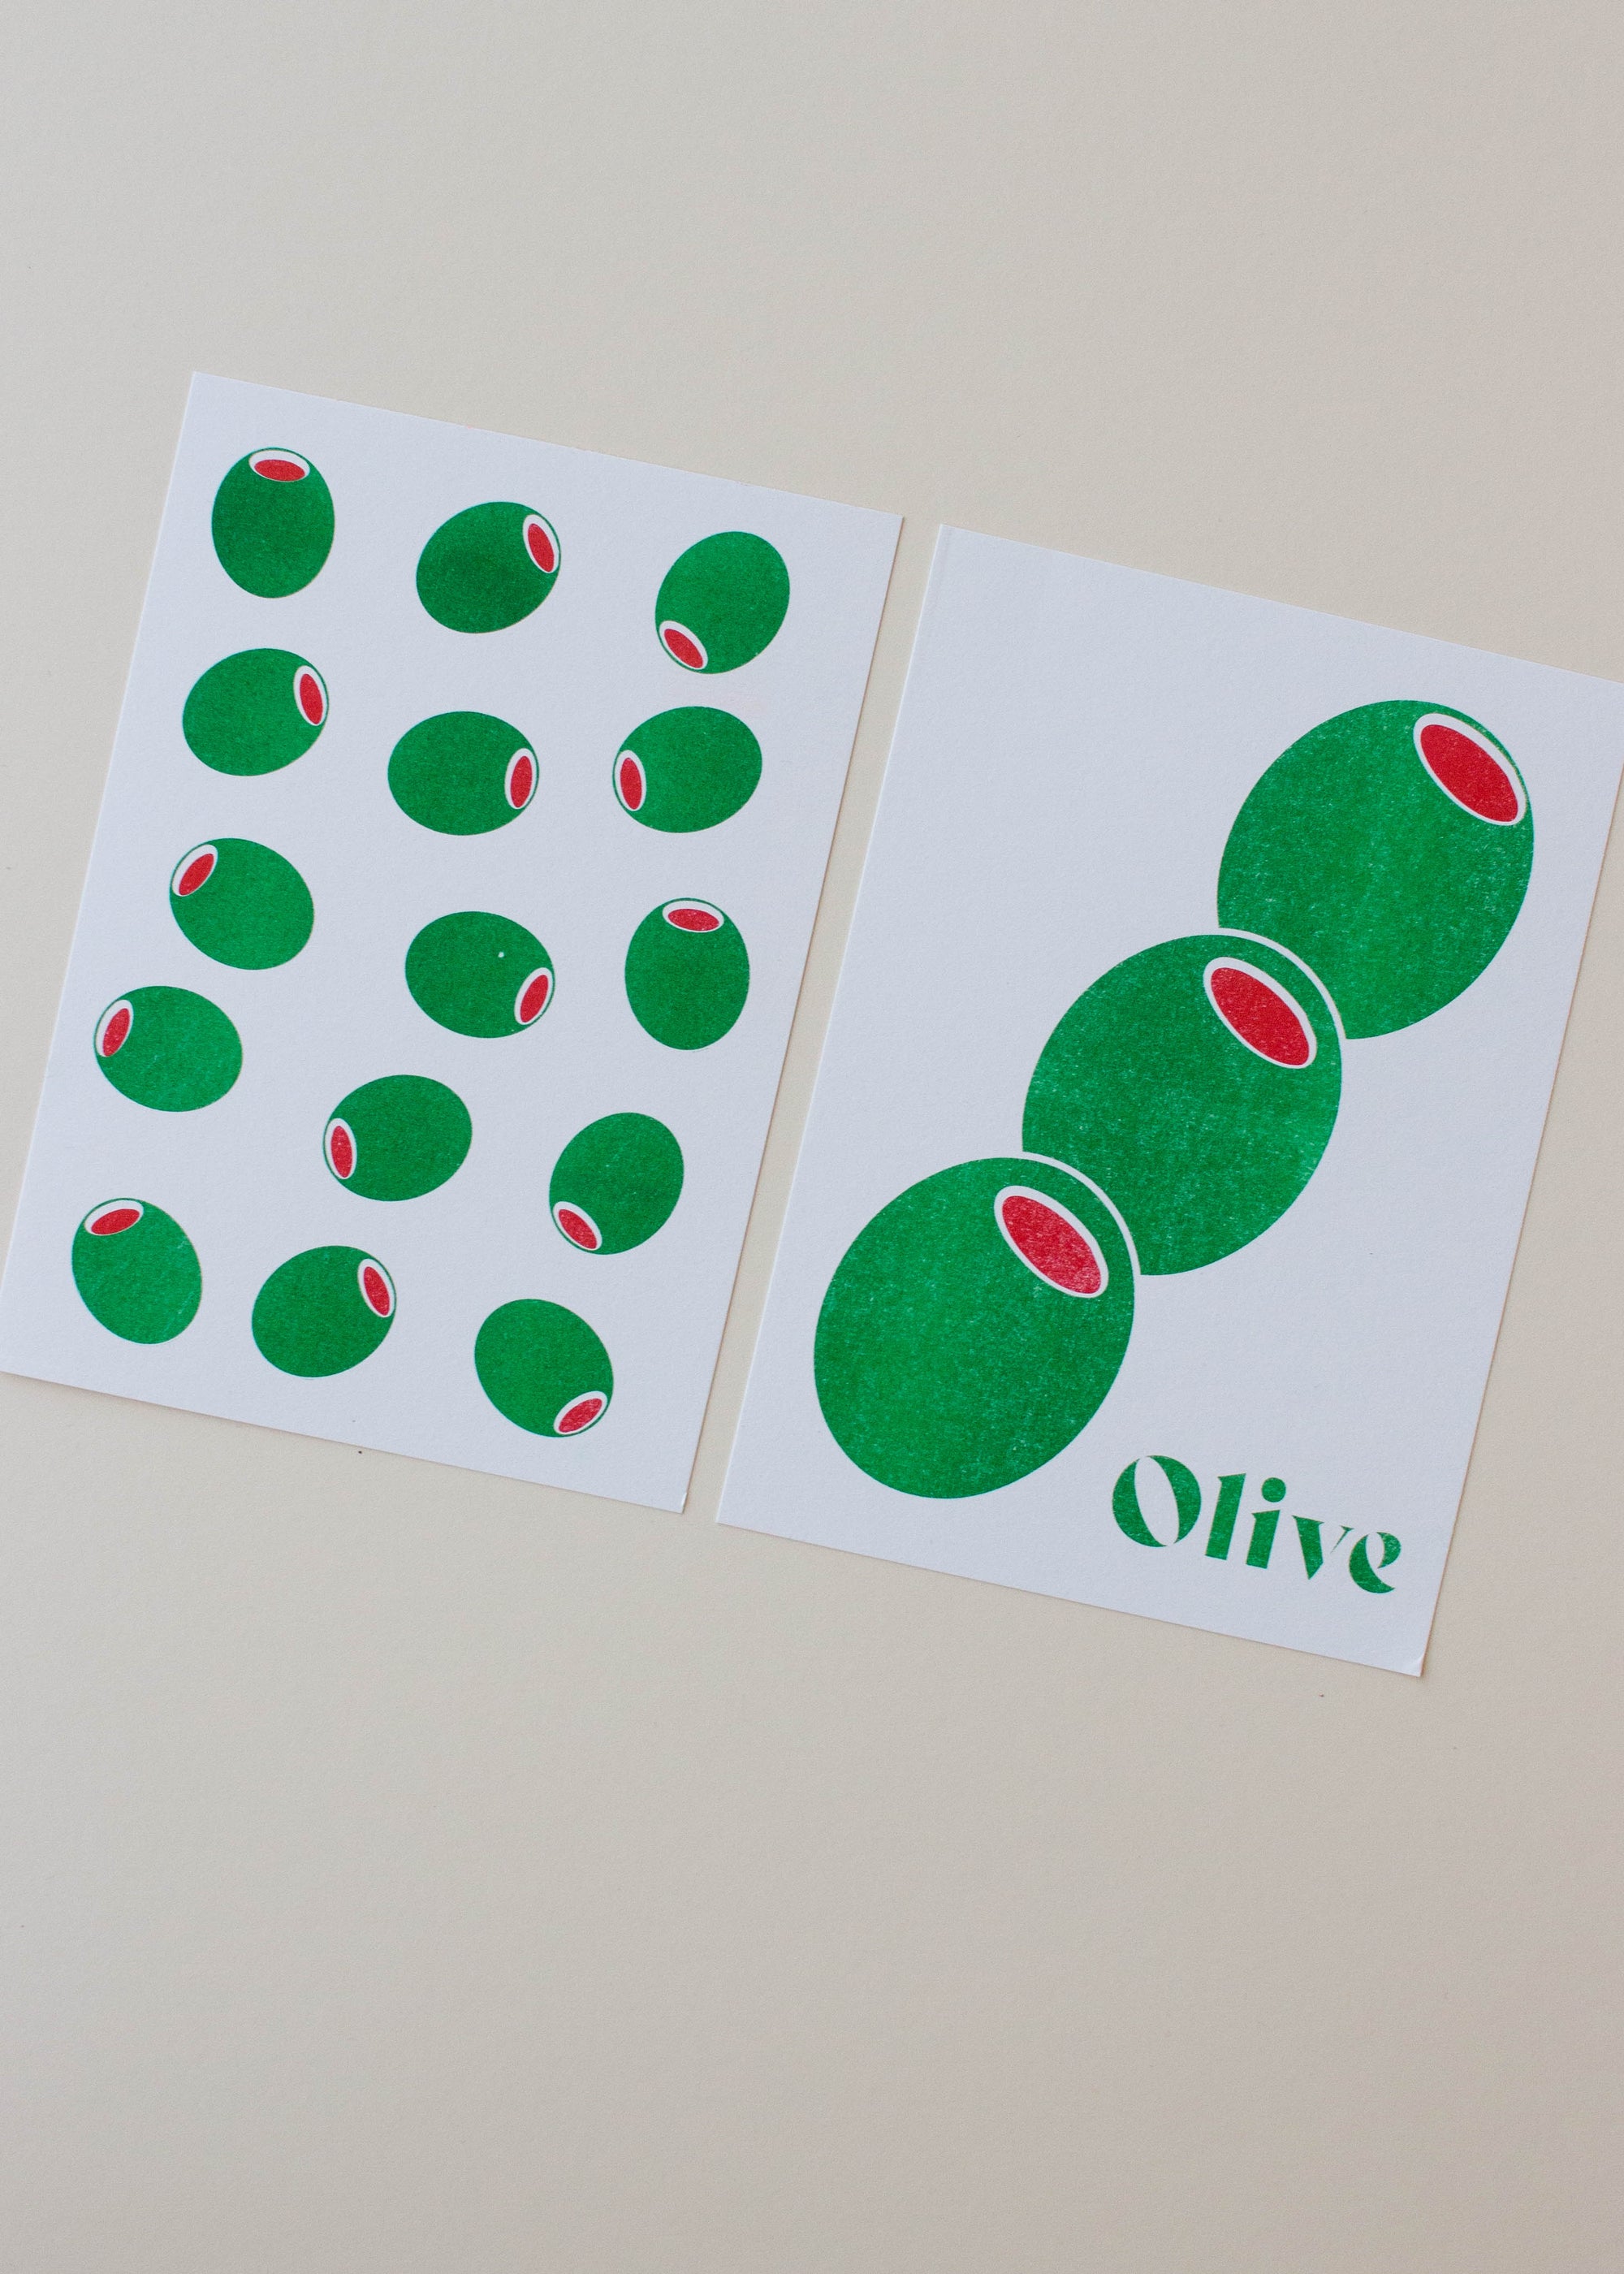 Olive Print Set